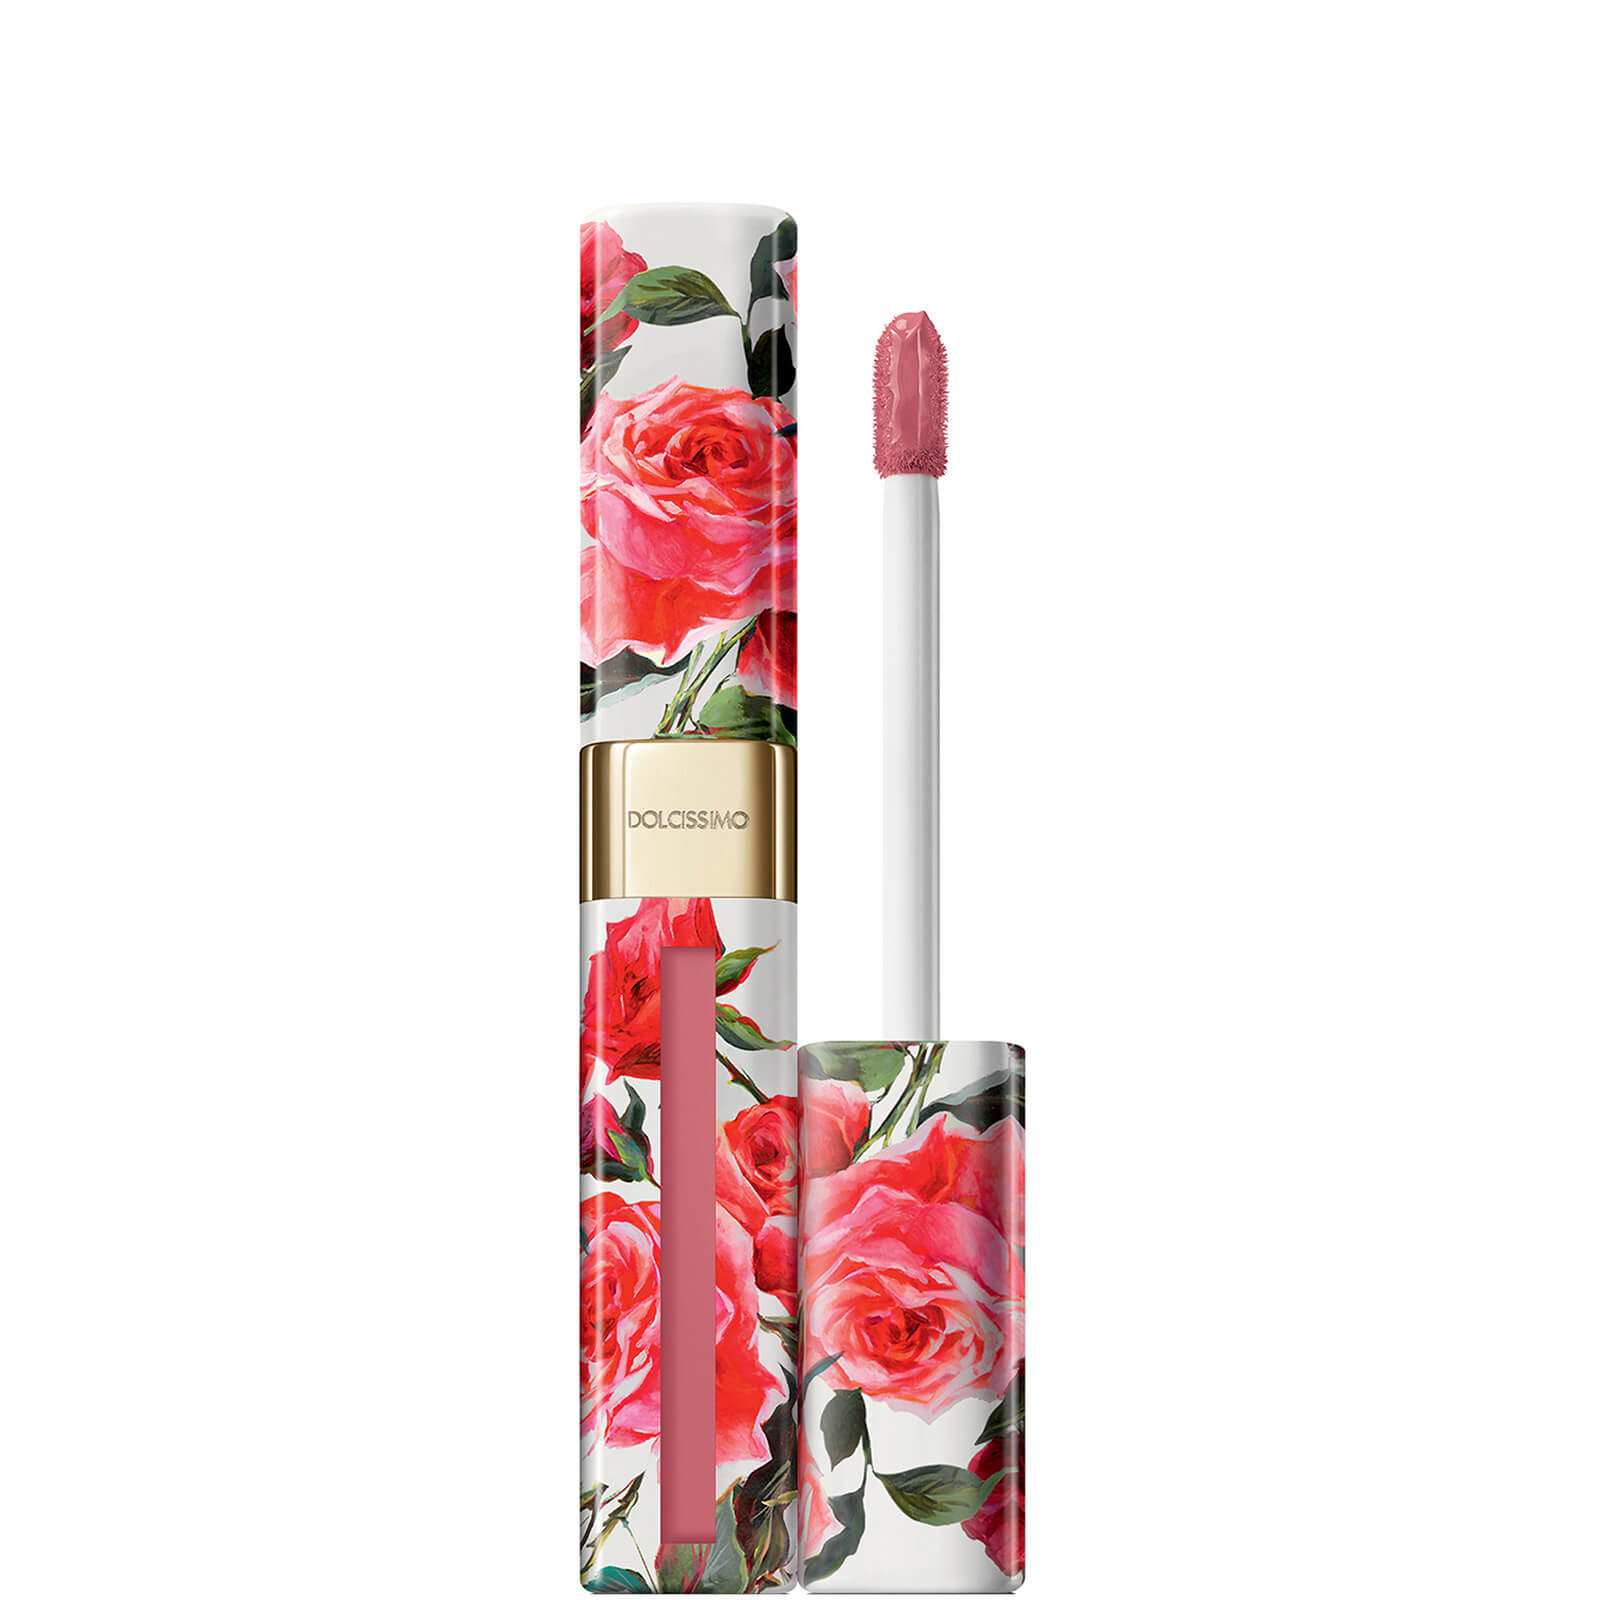 Dolce&Gabbana Dolcissimo Liquid Lipcolour 5Ml (Various Shades) - Rose 04